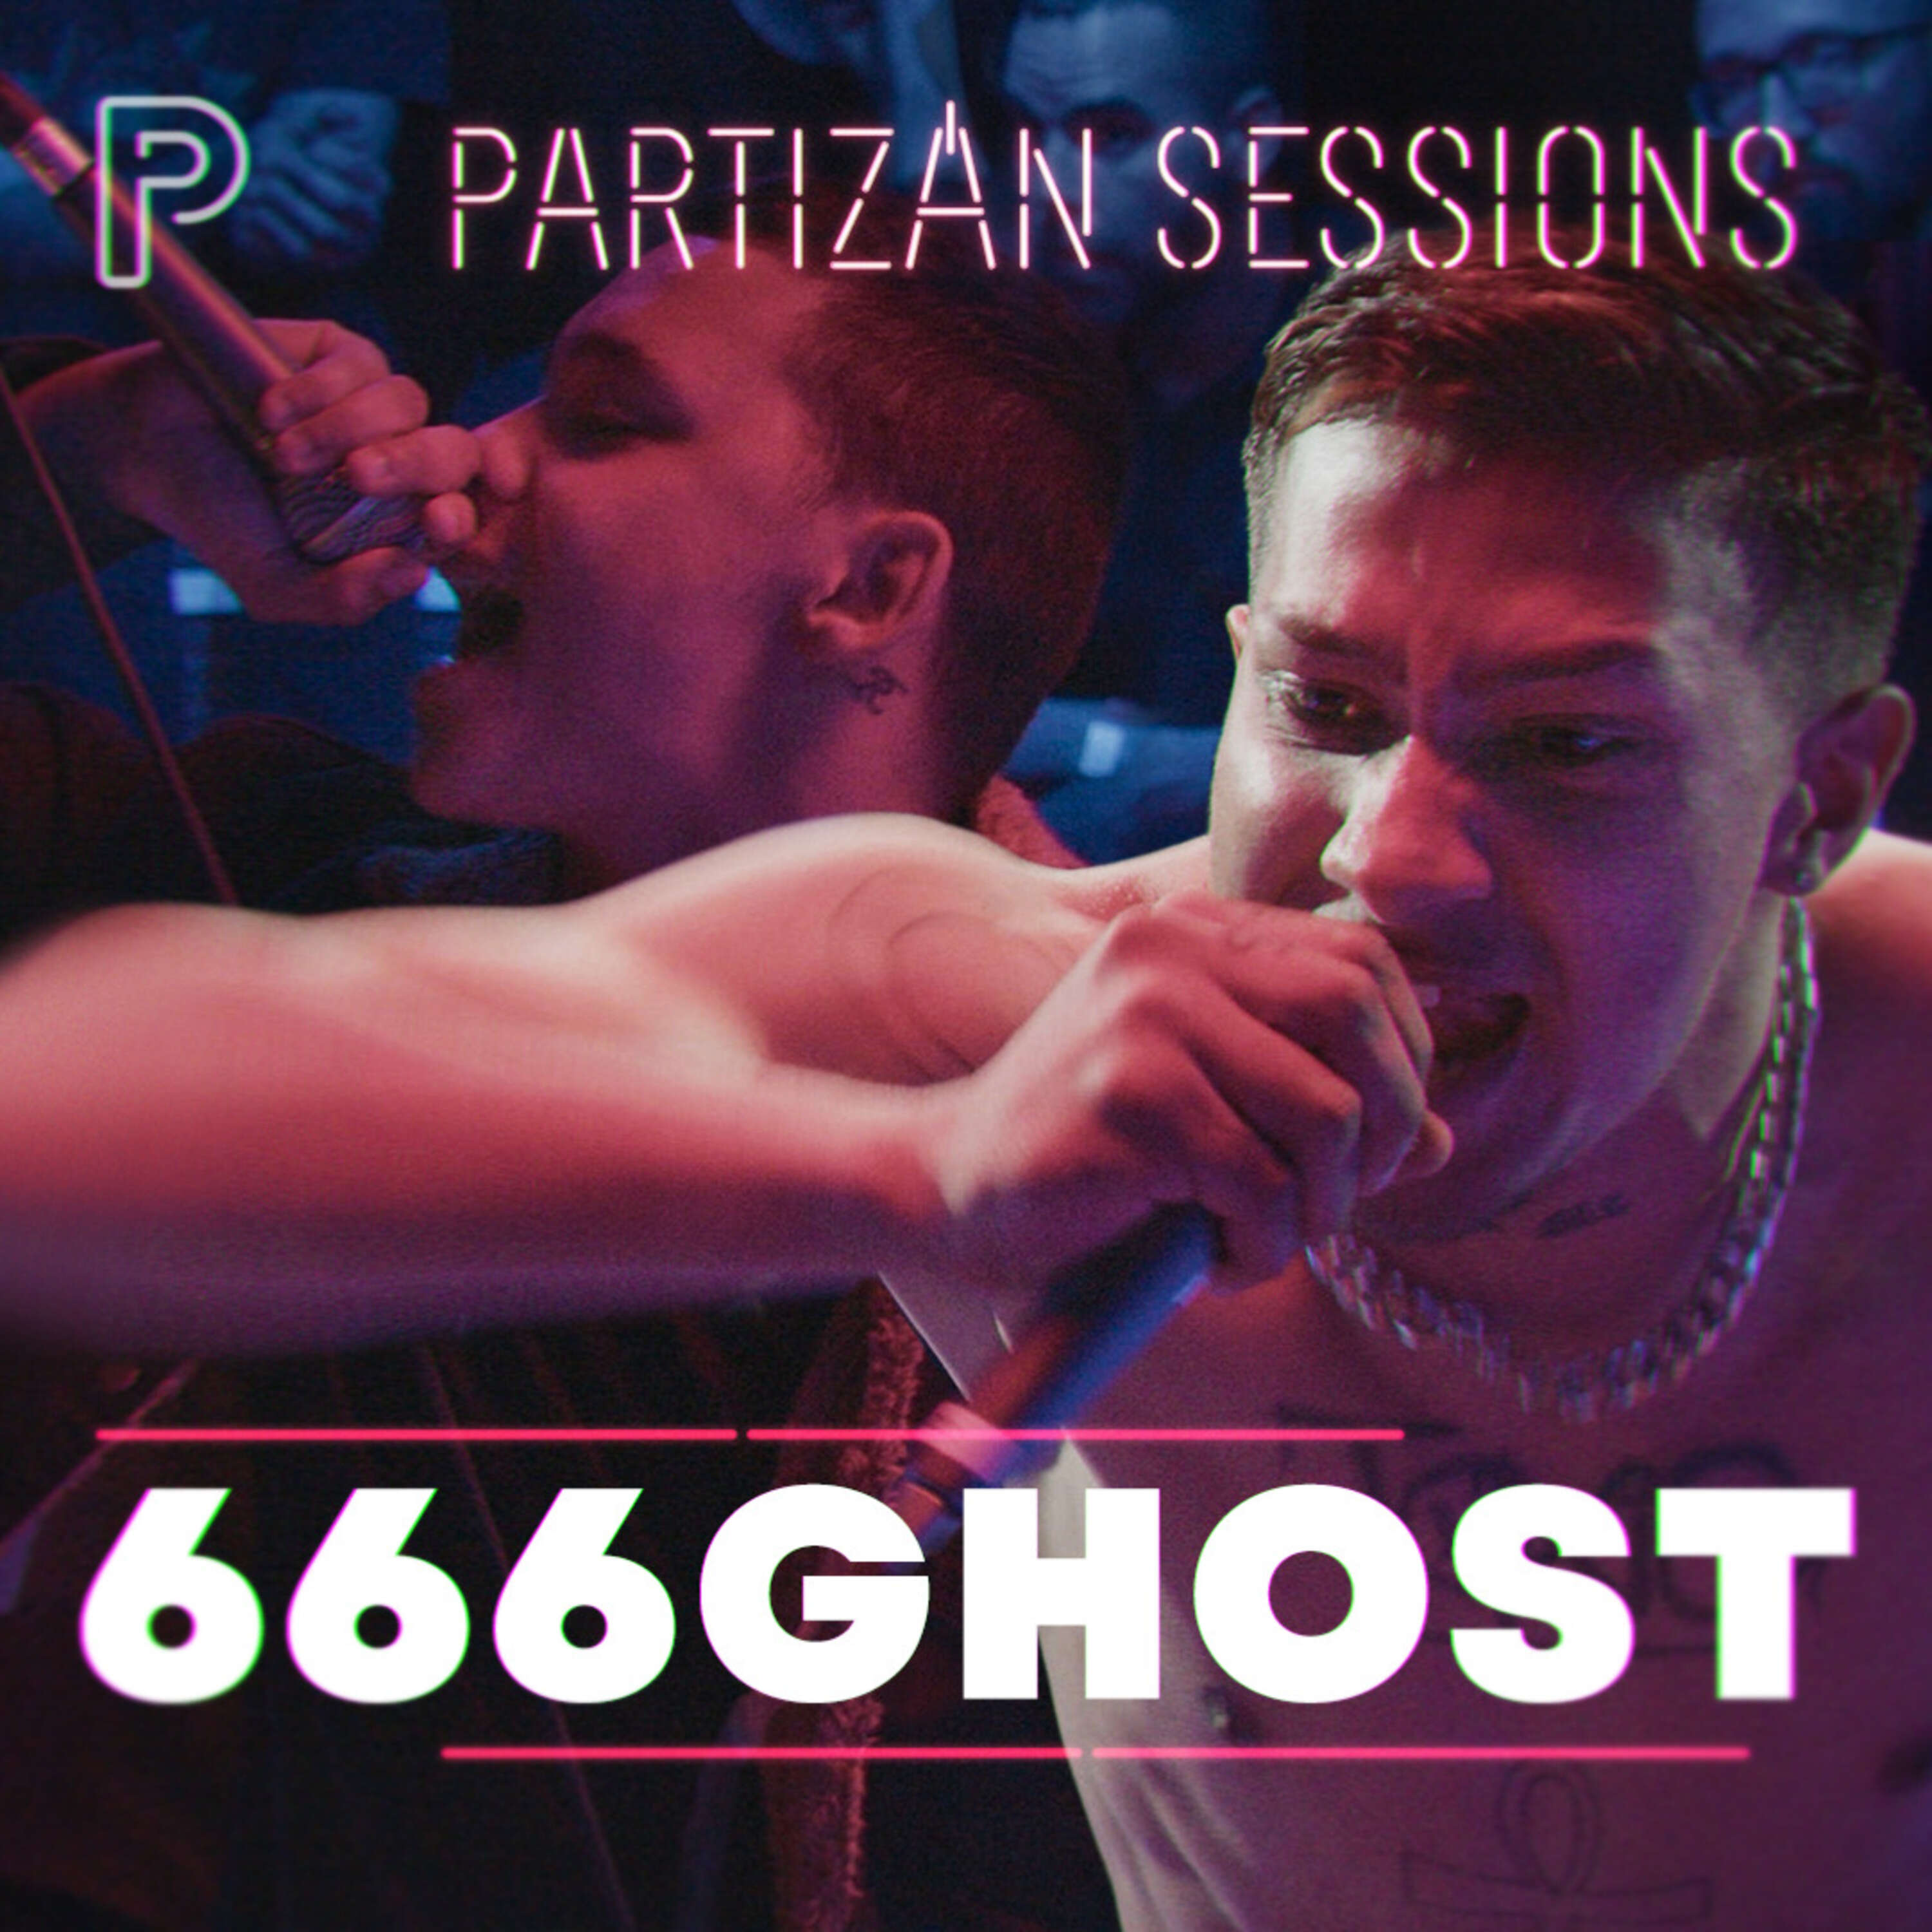 666GHOST - Lelkem az gyenge | Partizán Sessions